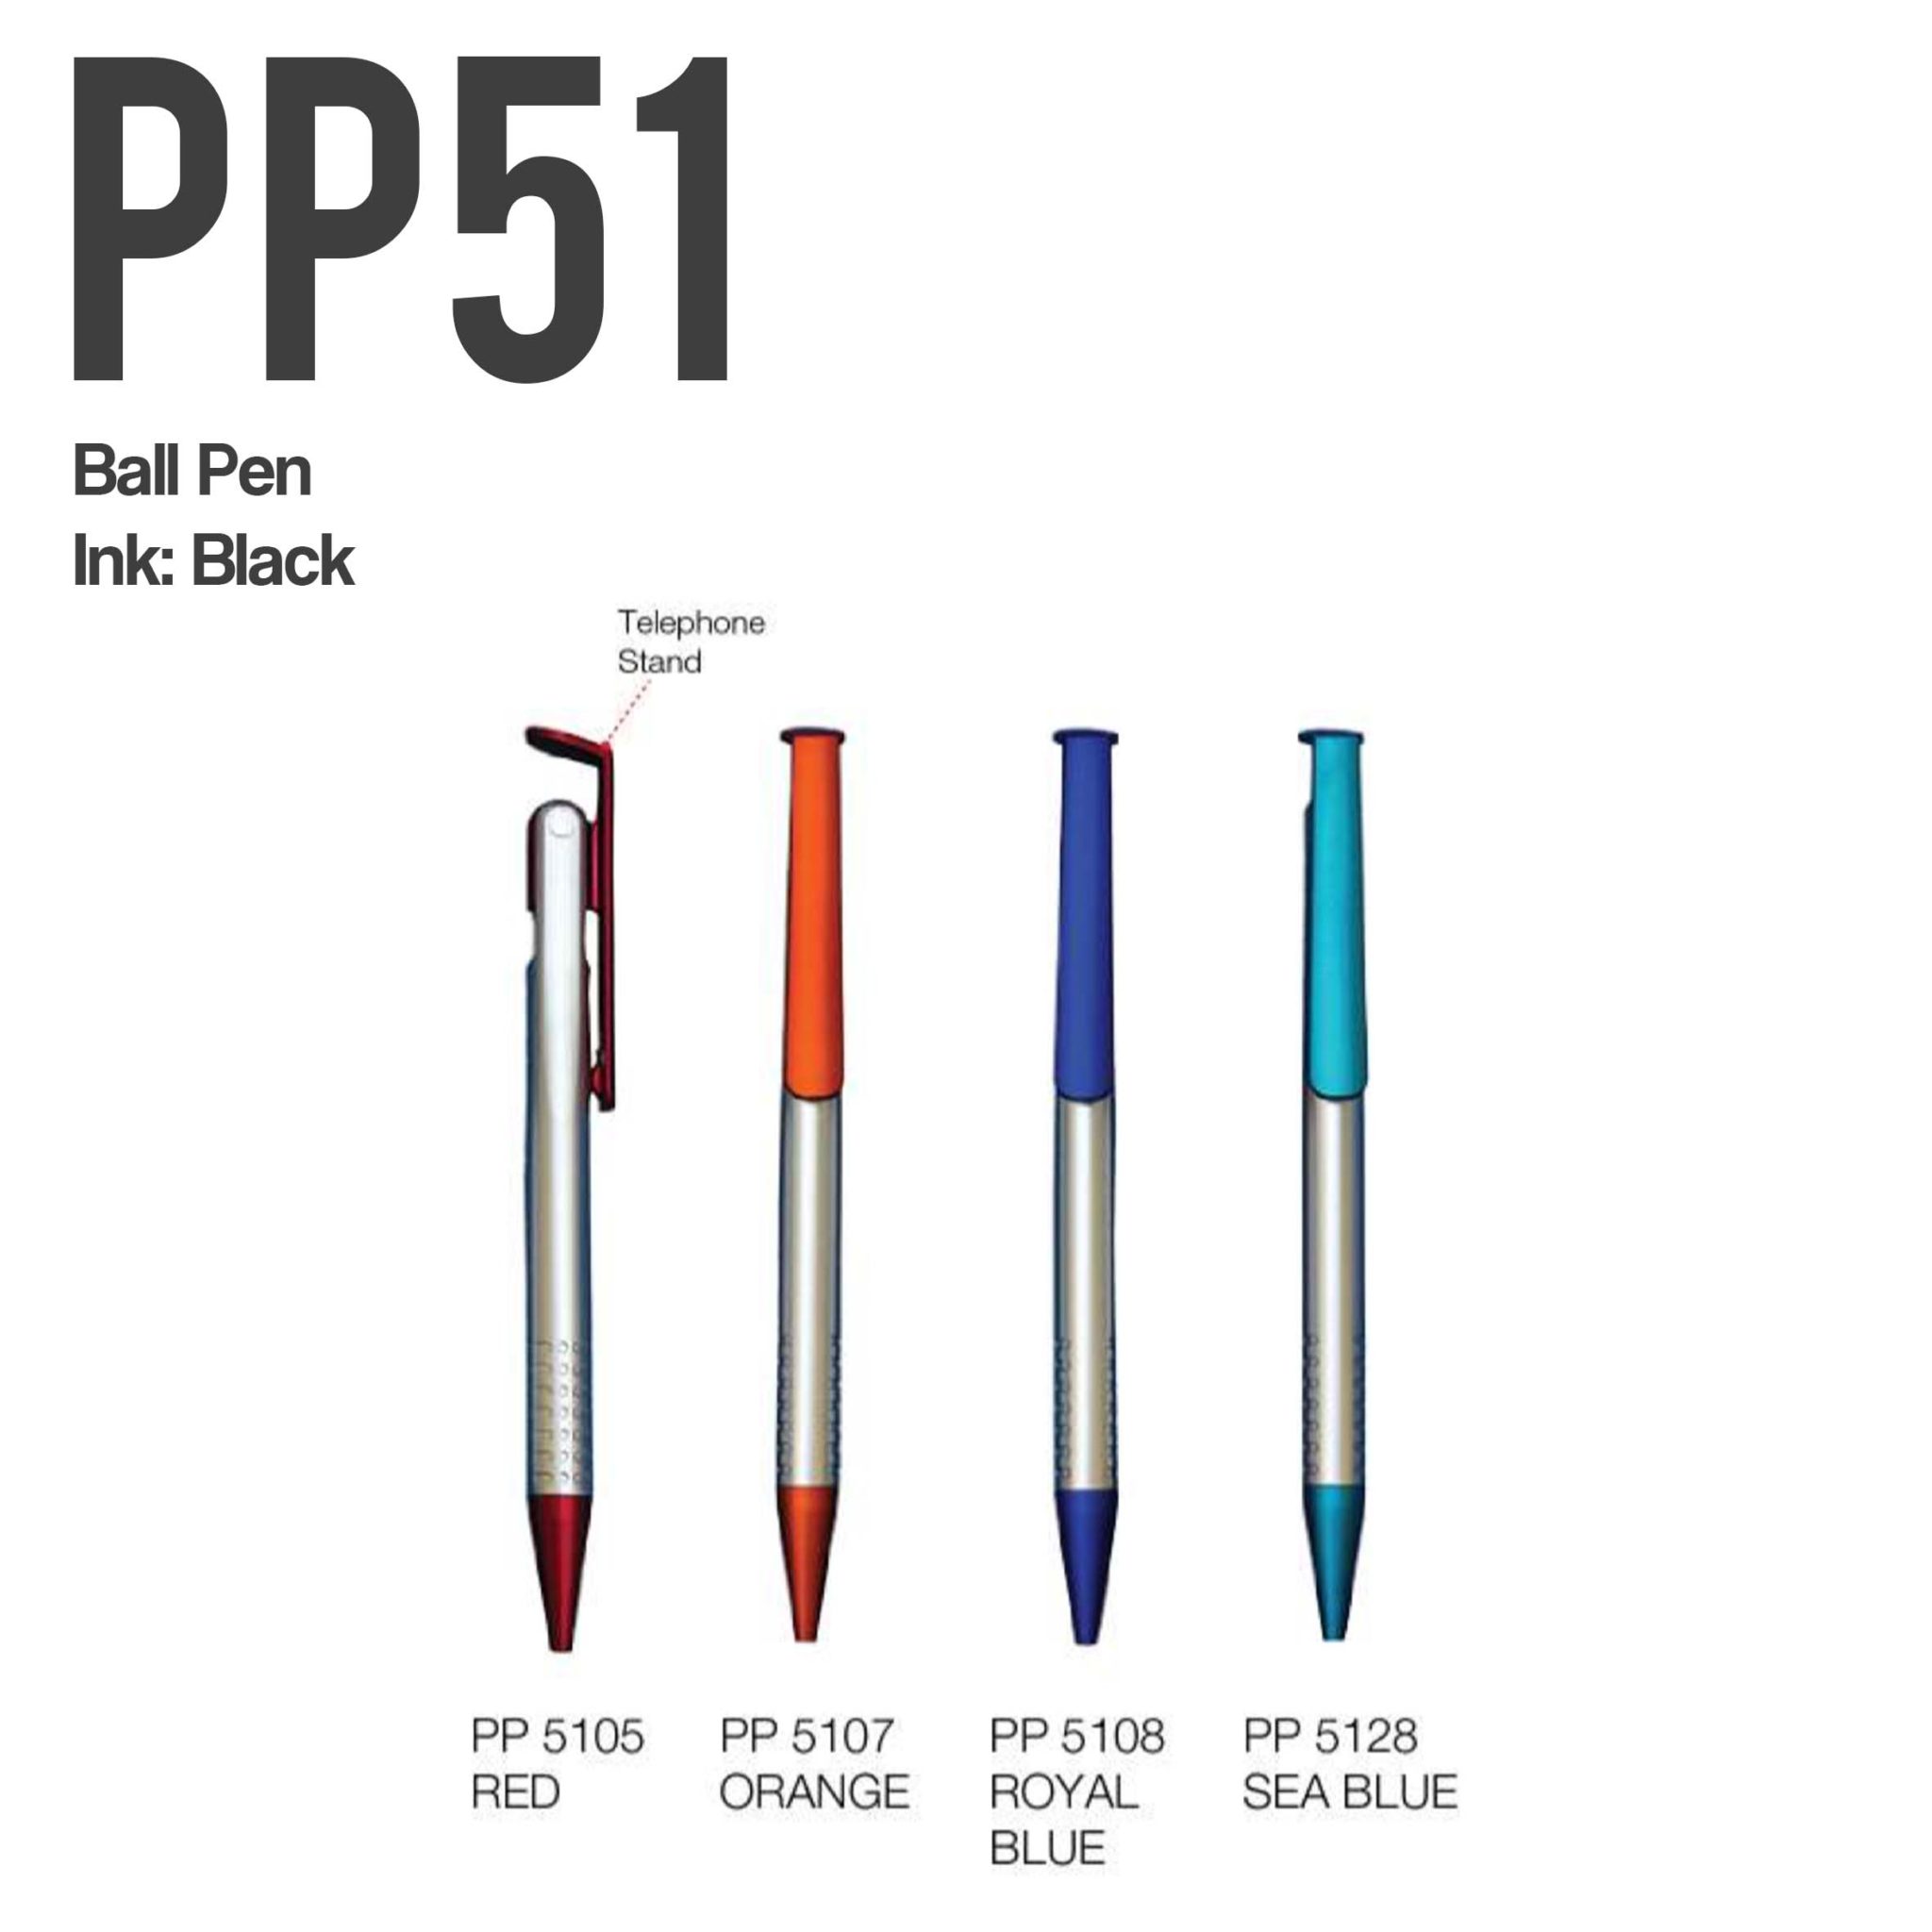 PP51 plastic pen scaled